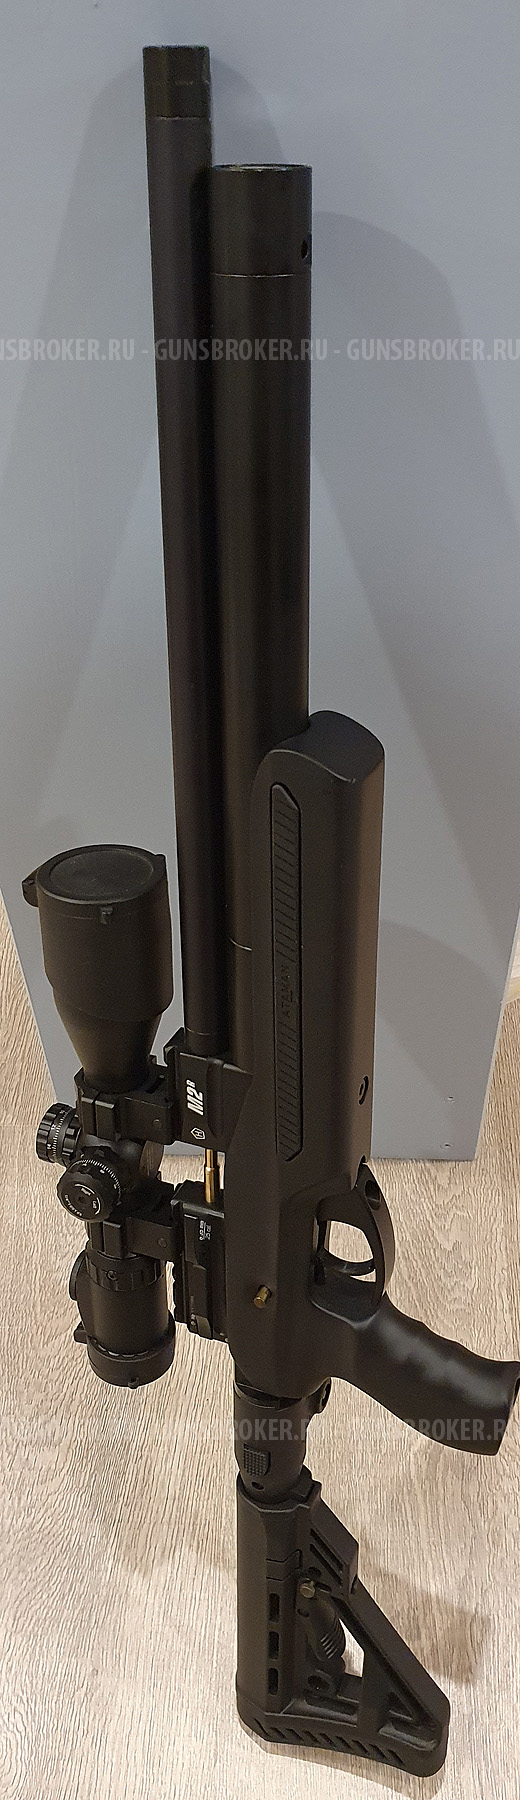 Пневматическая винтовка Ataman Ultra-C M2R 726  6.35 мм 